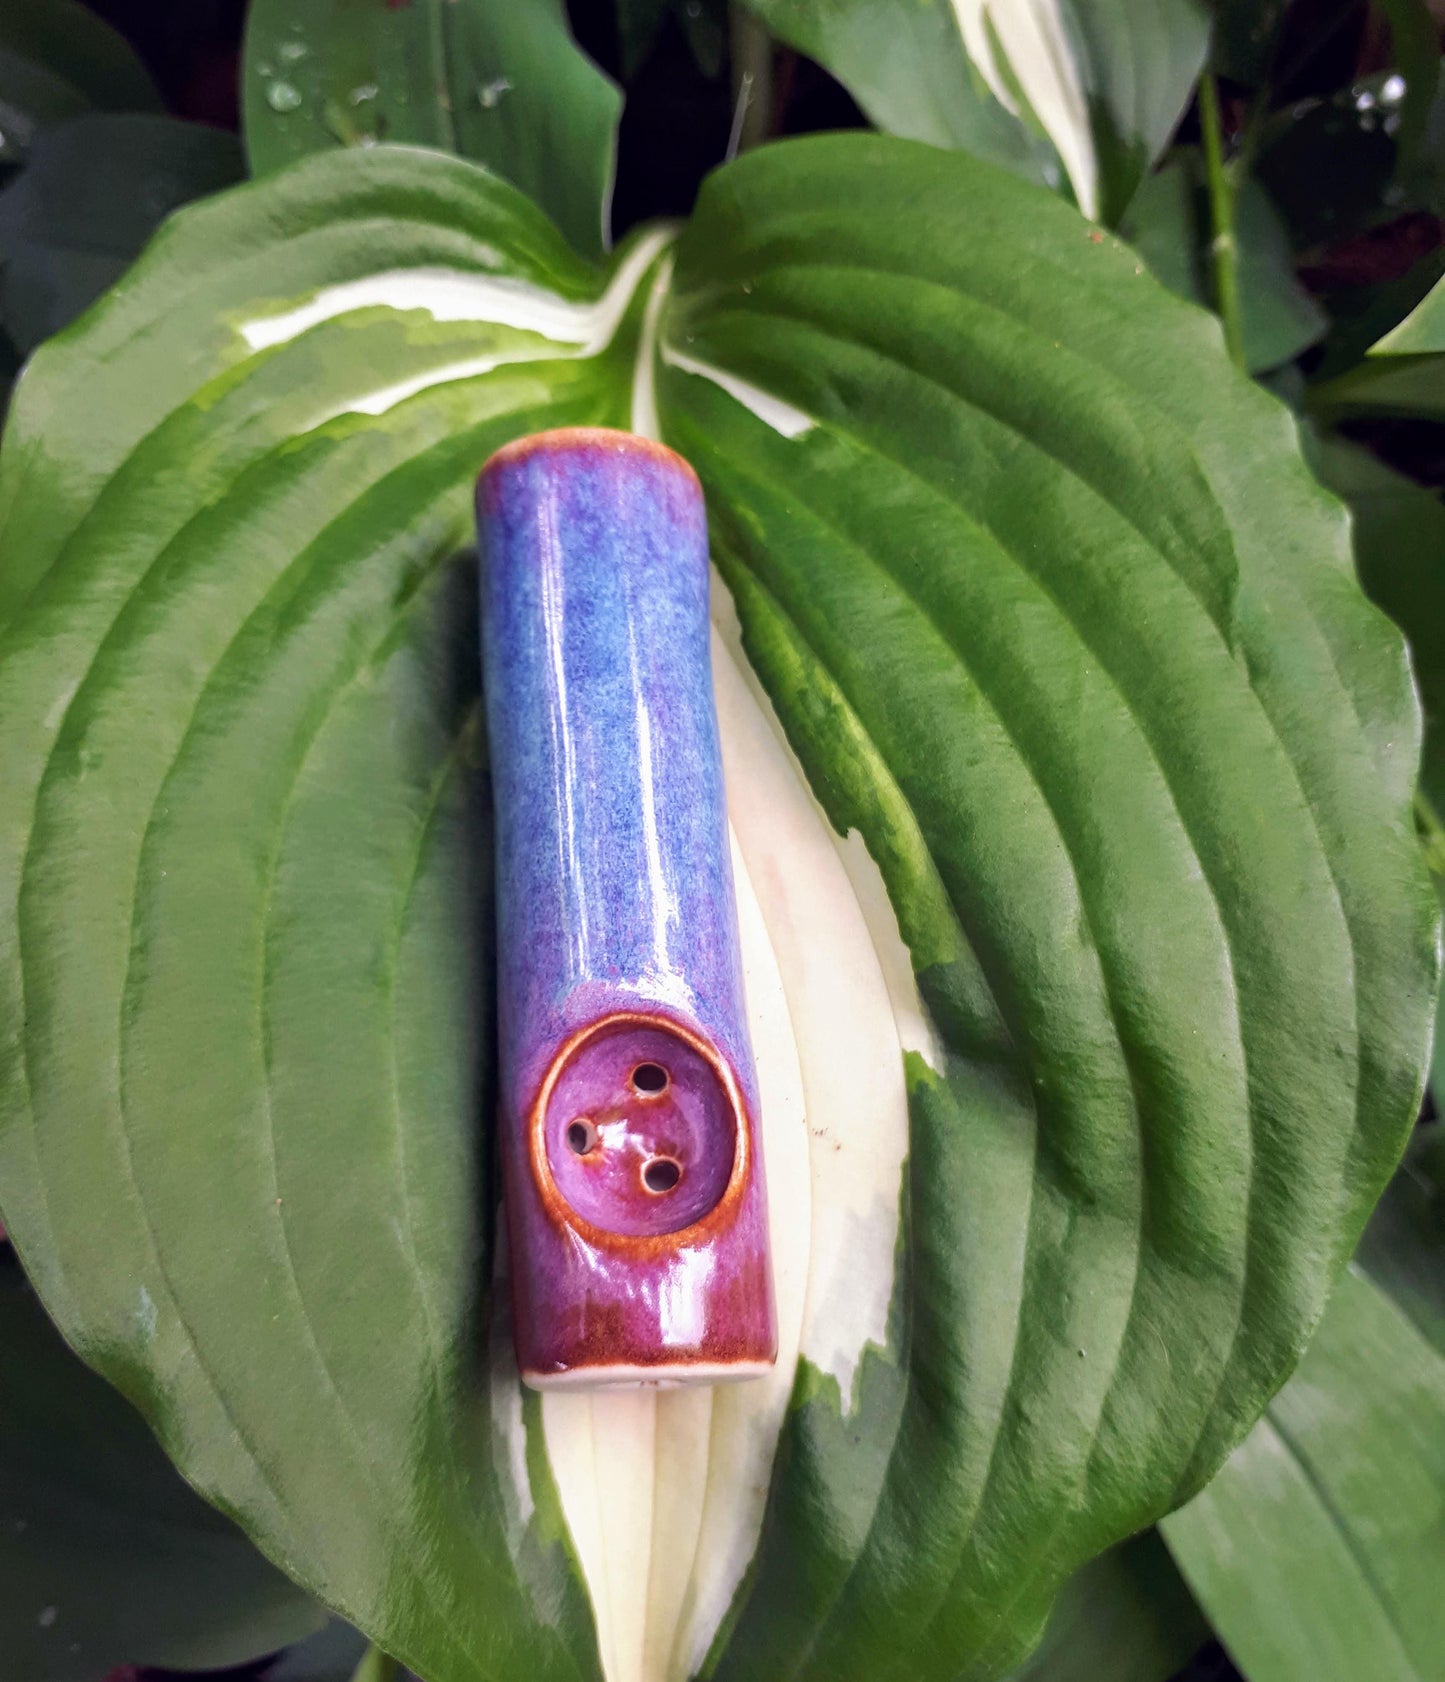 Blue rain, purple and blue mini purse pipe on hosta leaf